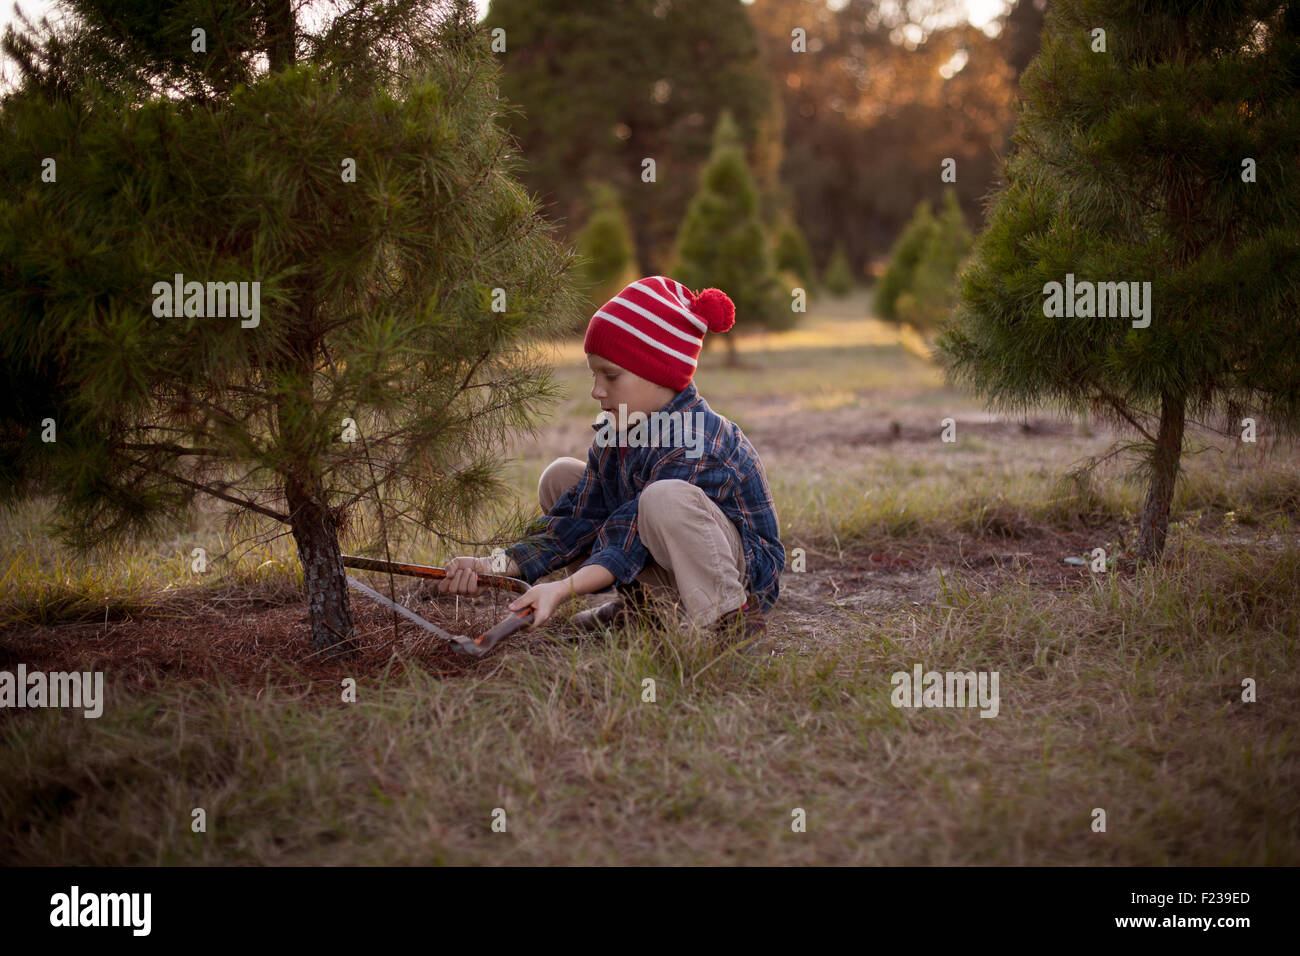 A boy cutting a Christmas tree with a hand saw on a tree farm. Stock Photo